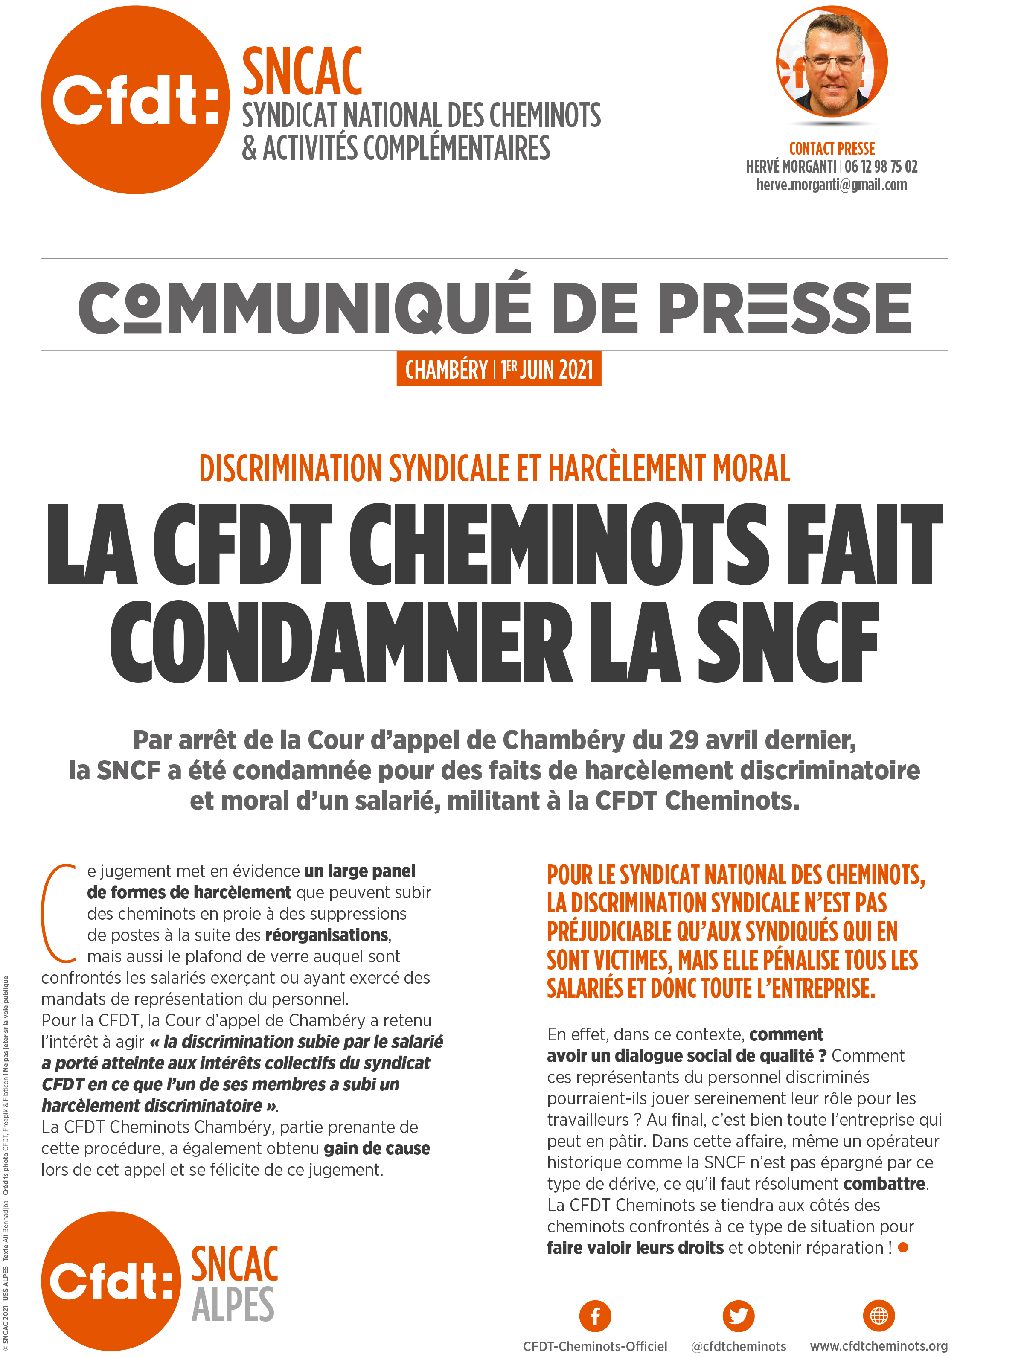 La CFDT Cheminots fait condamner la SNCF